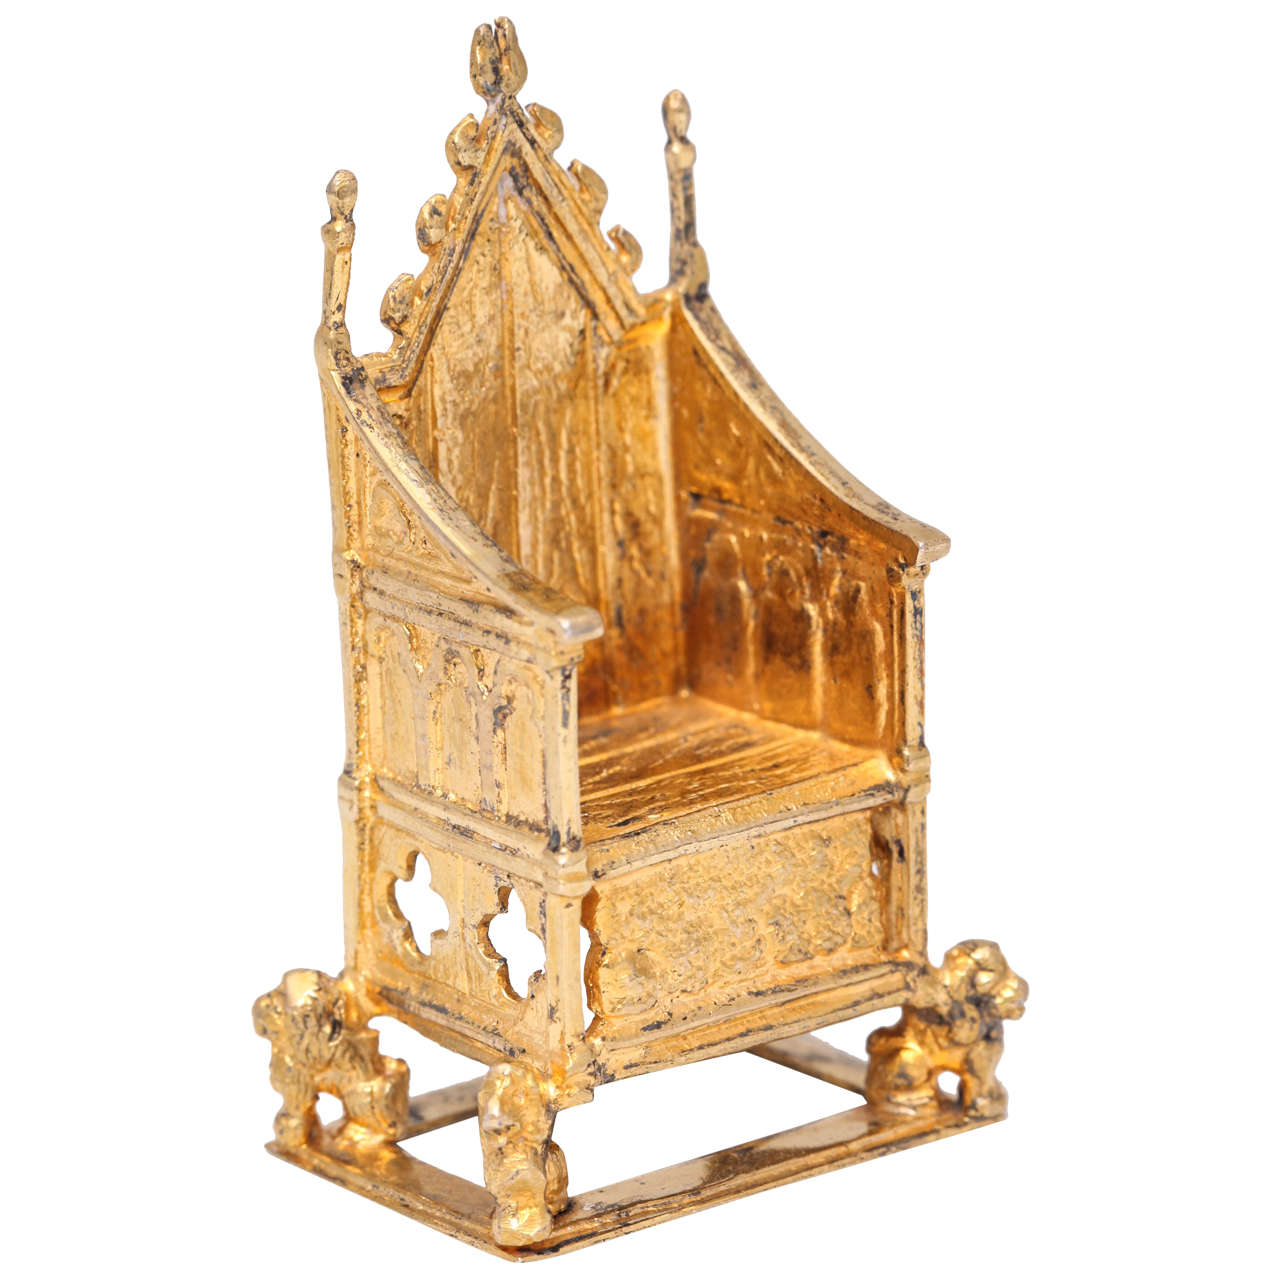 Edwardian Sterling Silver-Gilt Miniature Coronation Throne or Chair